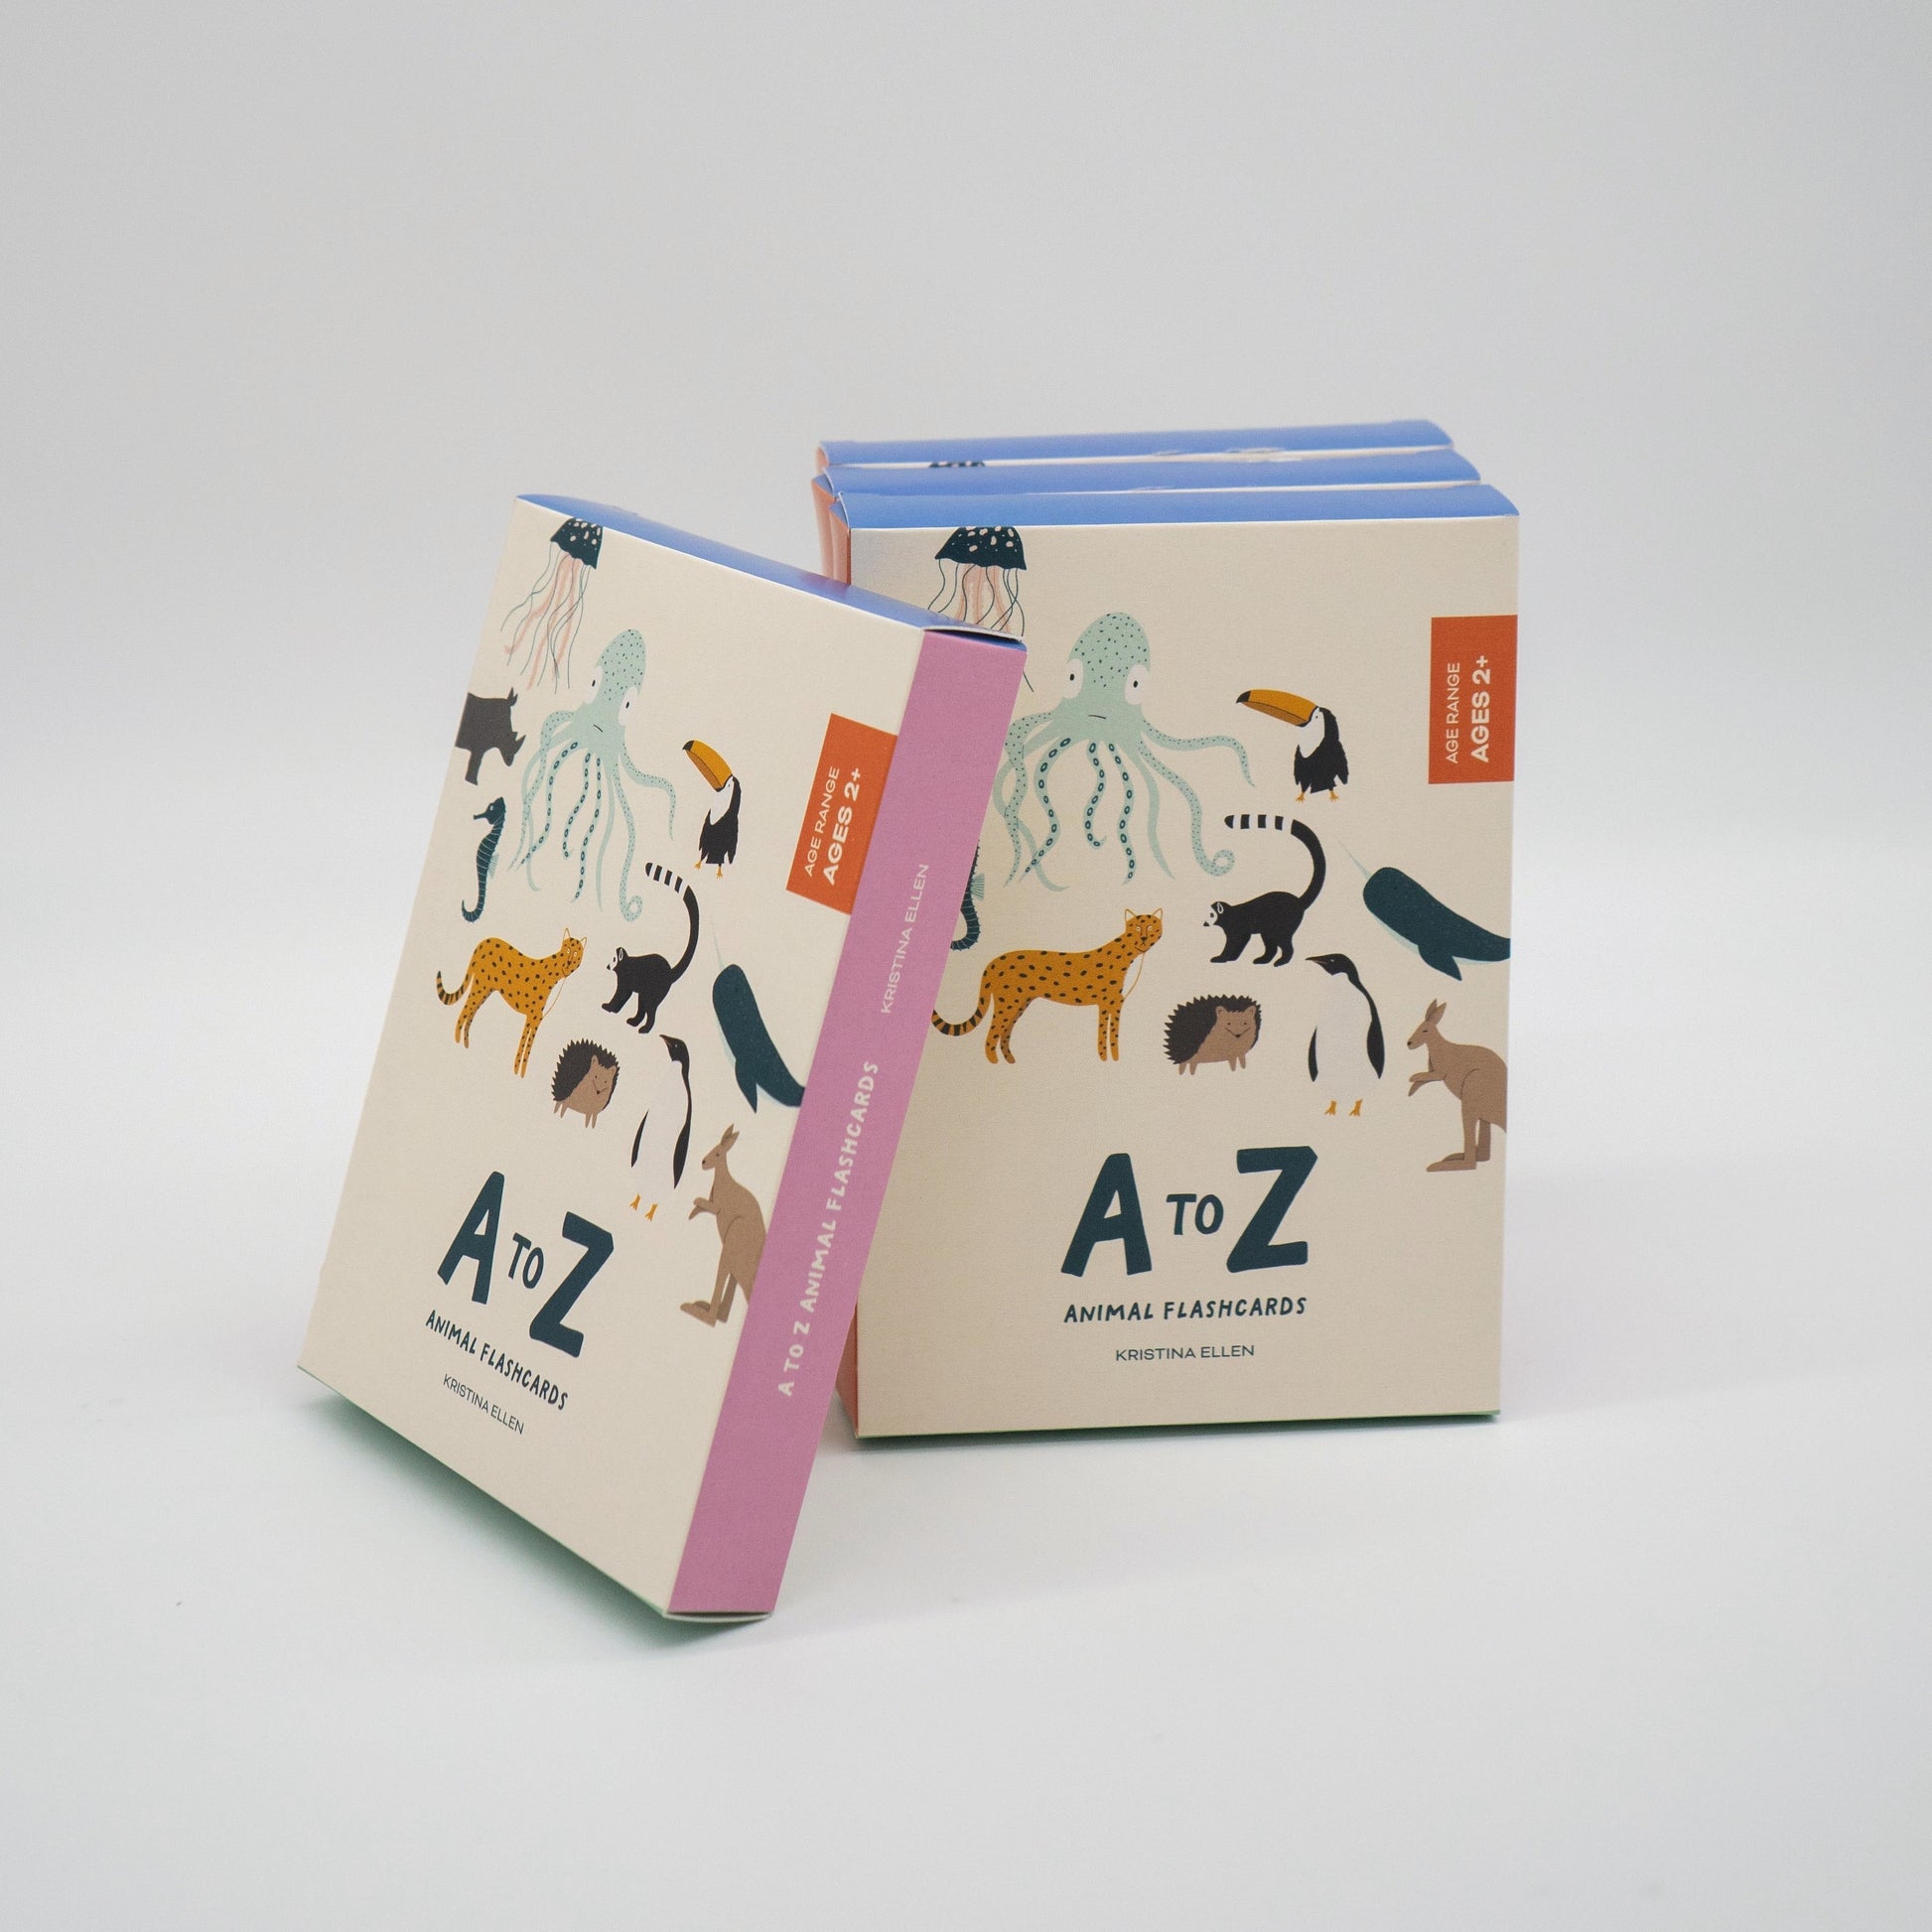 A to Z Animal Flashcard Box